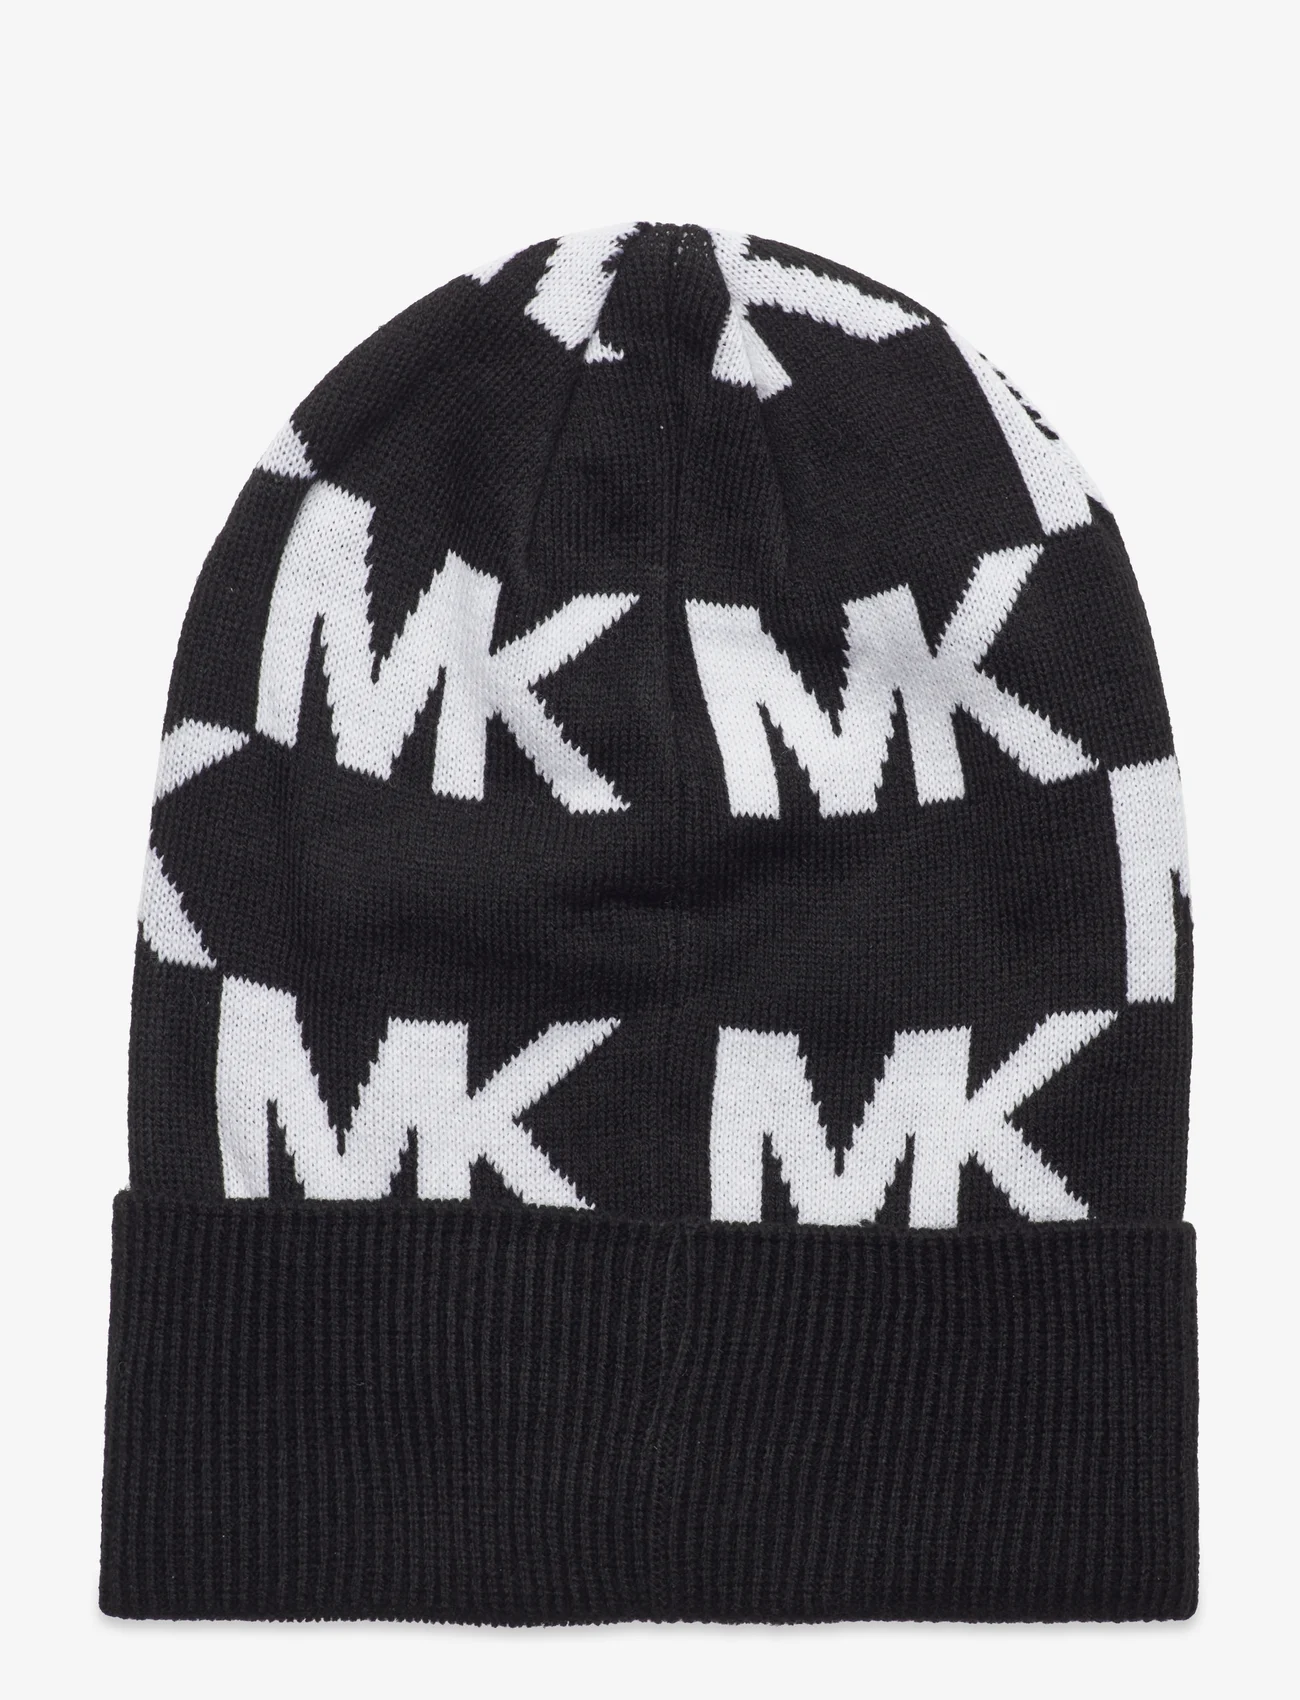 Michael Kors Accessories - Oversized chess mk cuff hat - bonnets - black, cream - 1